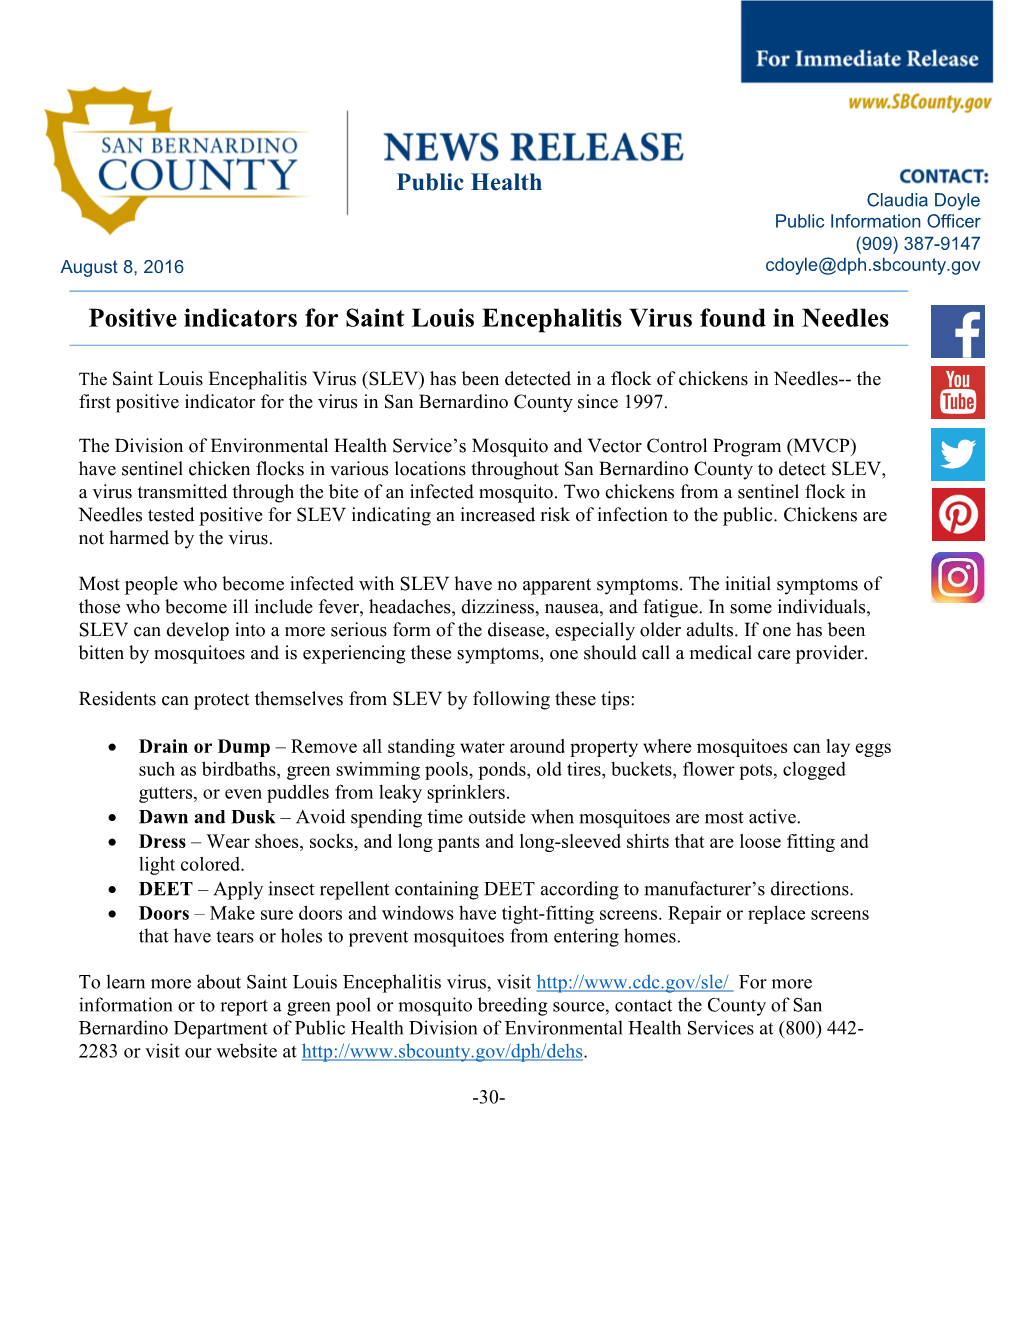 Positive Indicators for Saint Louis Encephalitis Virus Found in Needles